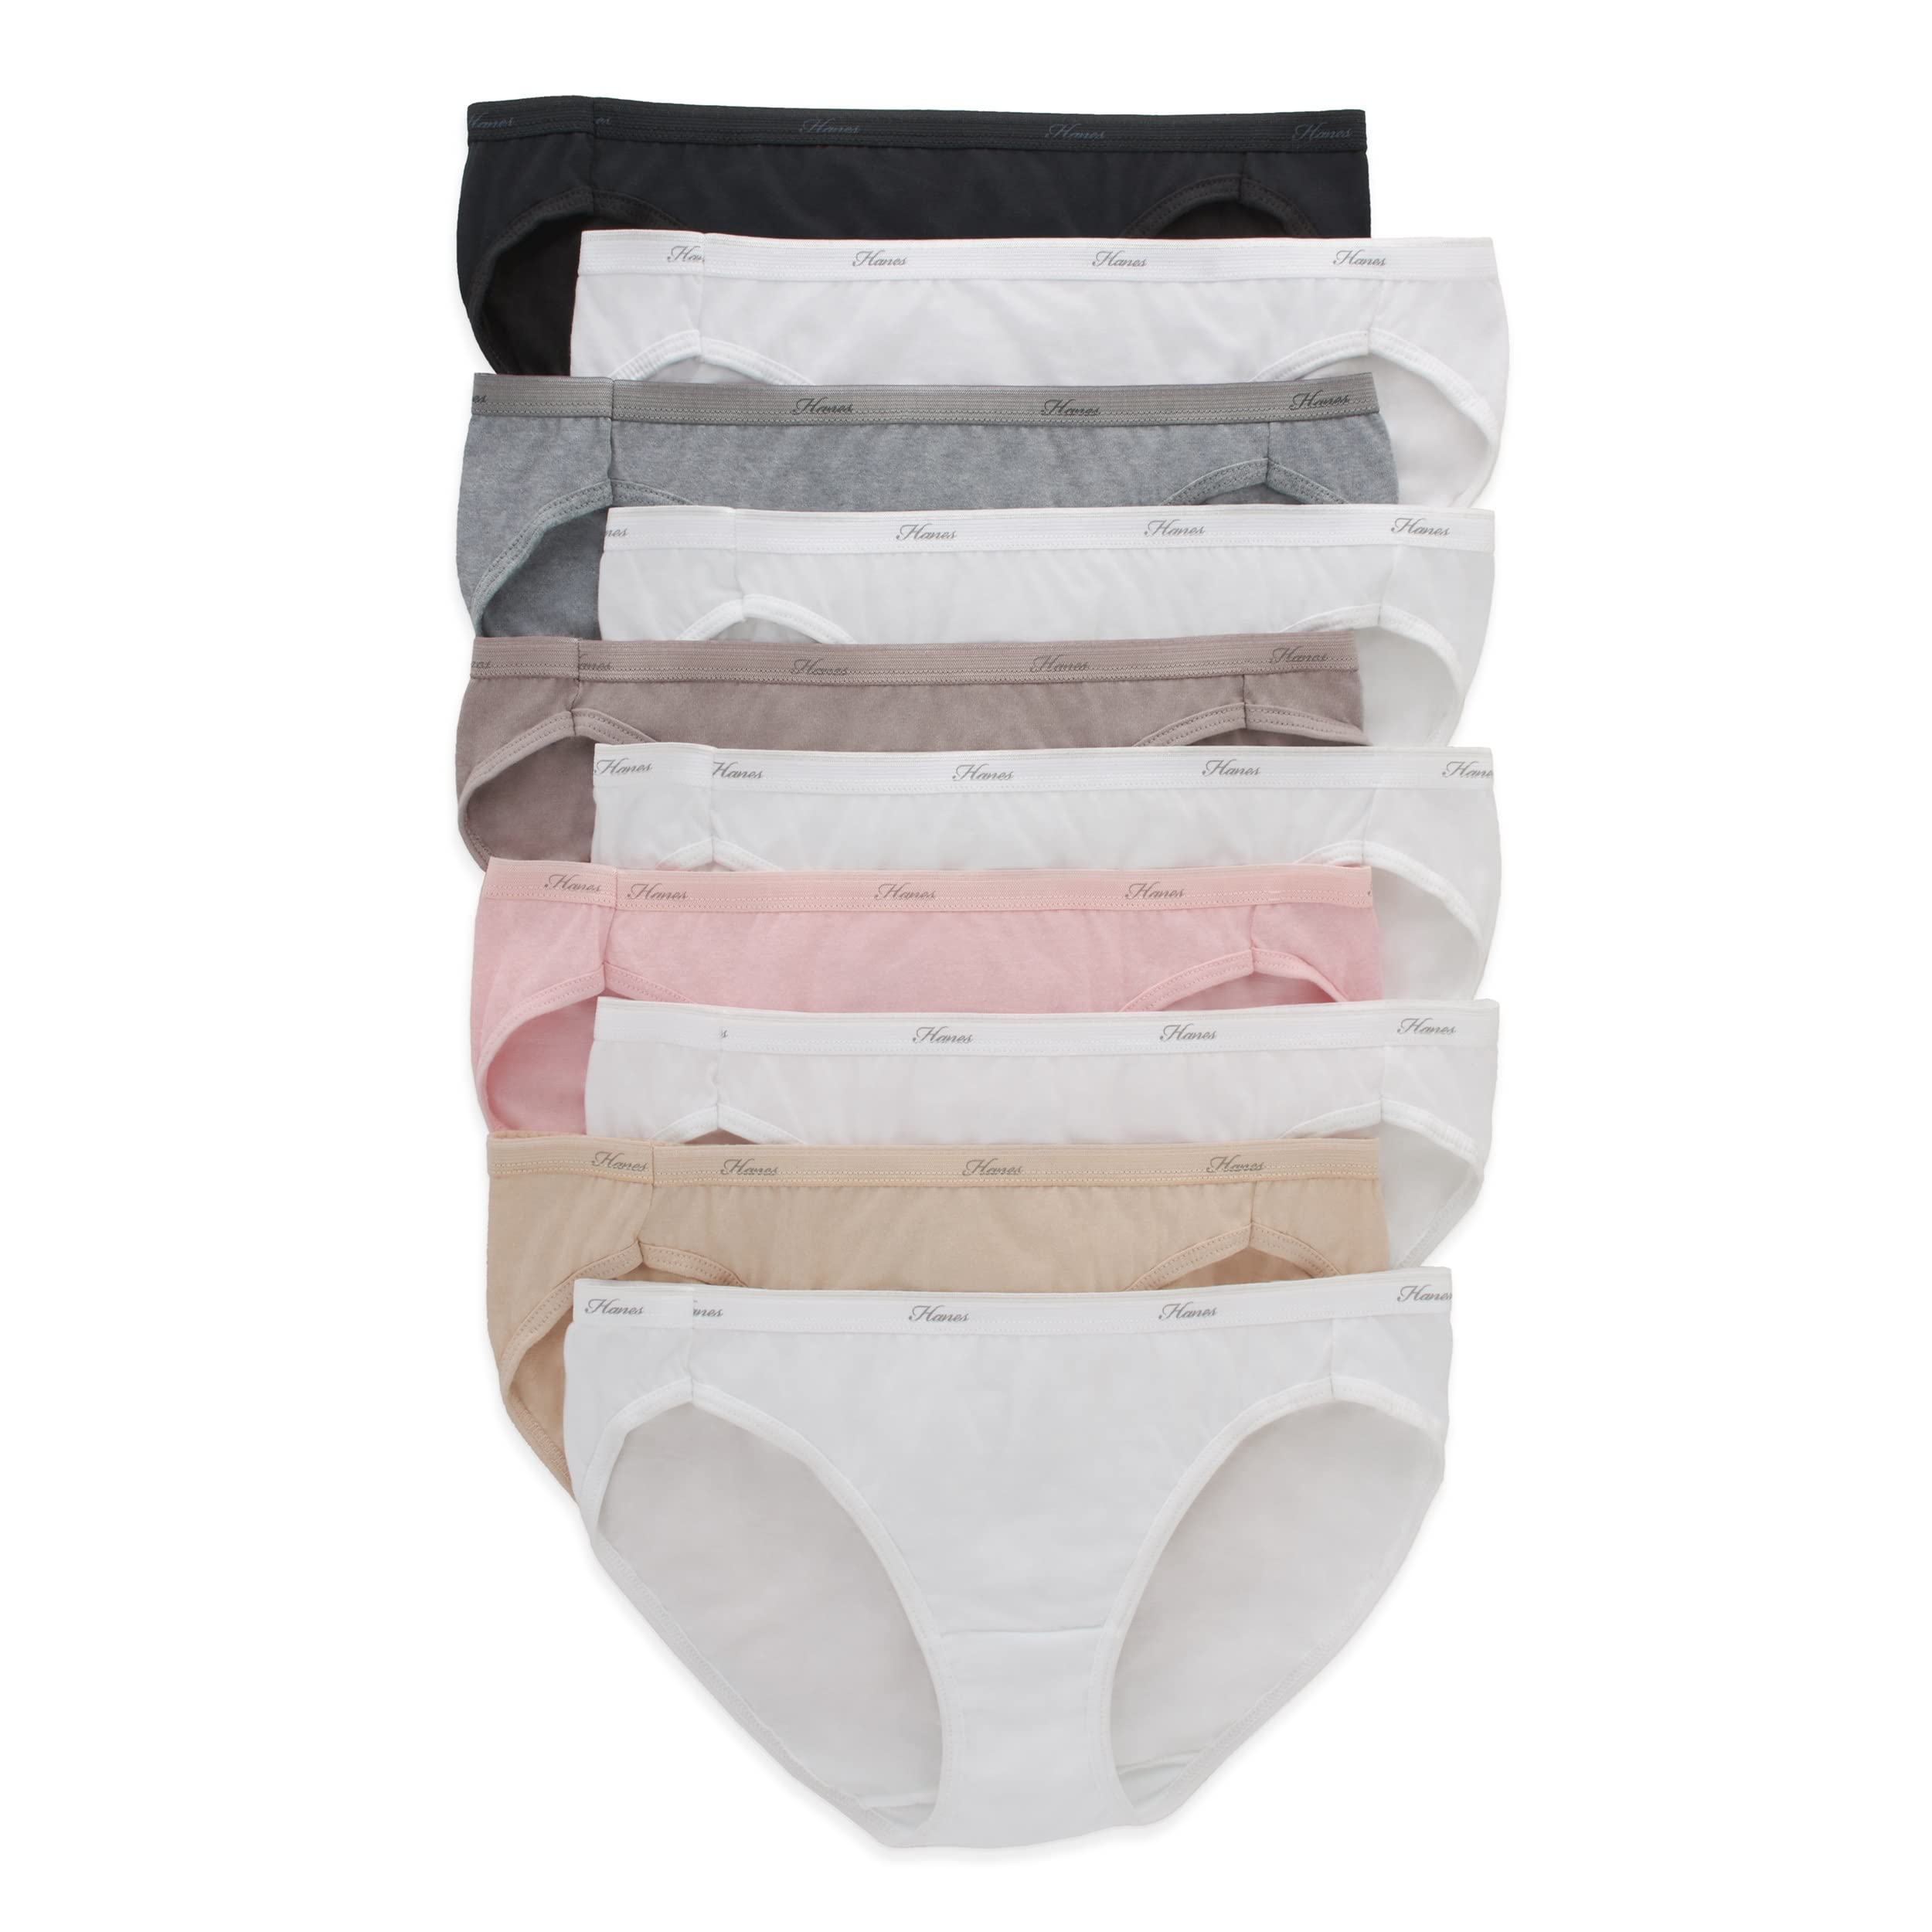 Hanes Women's Bikini Panties Pack, Lightweight Soft Cotton Underwear (Colors May Vary)